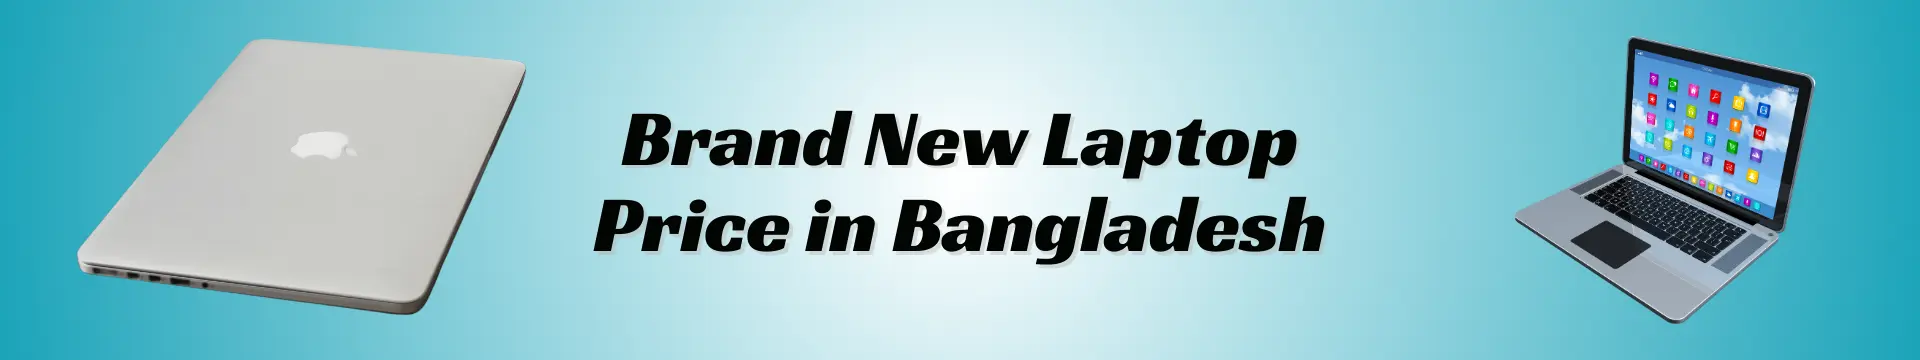 Brand New Laptop Price in Bangladesh